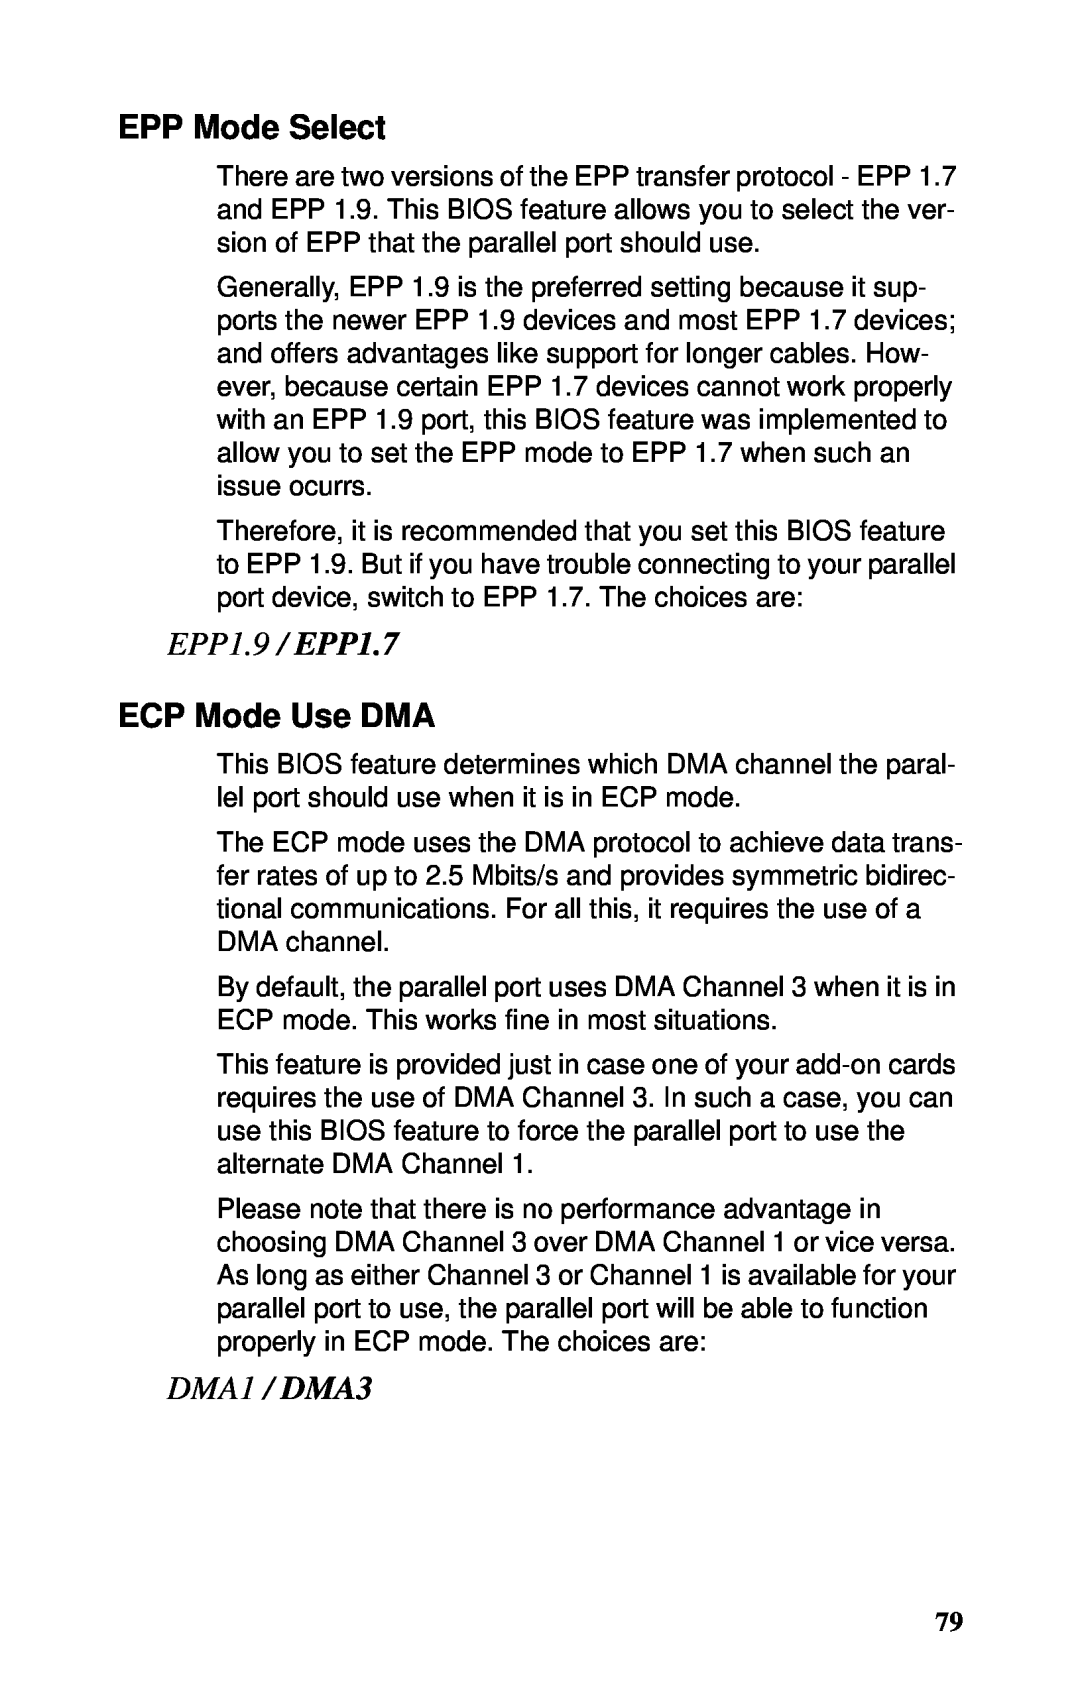 Tyan Computer GX21, B5102 manual EPP Mode Select, EPP1.9 / EPP1.7, ECP Mode Use DMA, DMA1 / DMA3 